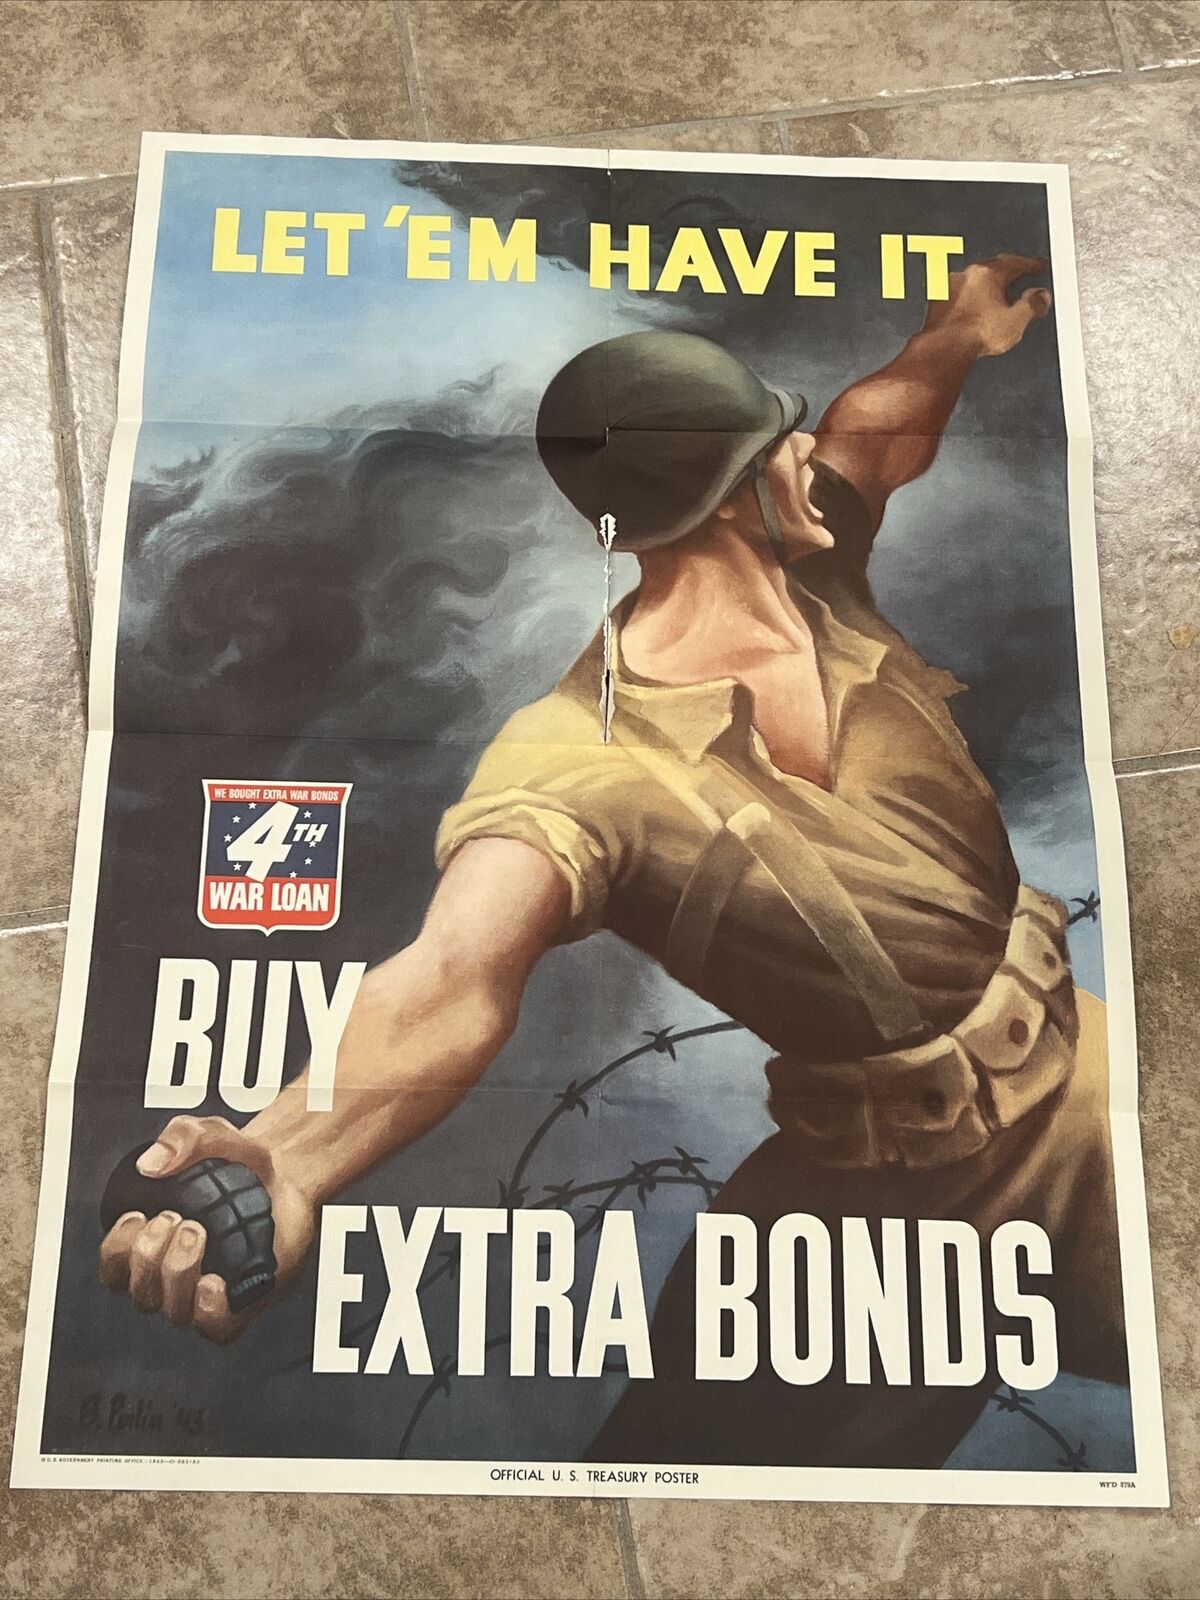 Rare 1943 “Let ‘em Have It” “Buy Extra Bonds” WW2 Propaganda Poster 28”x20”